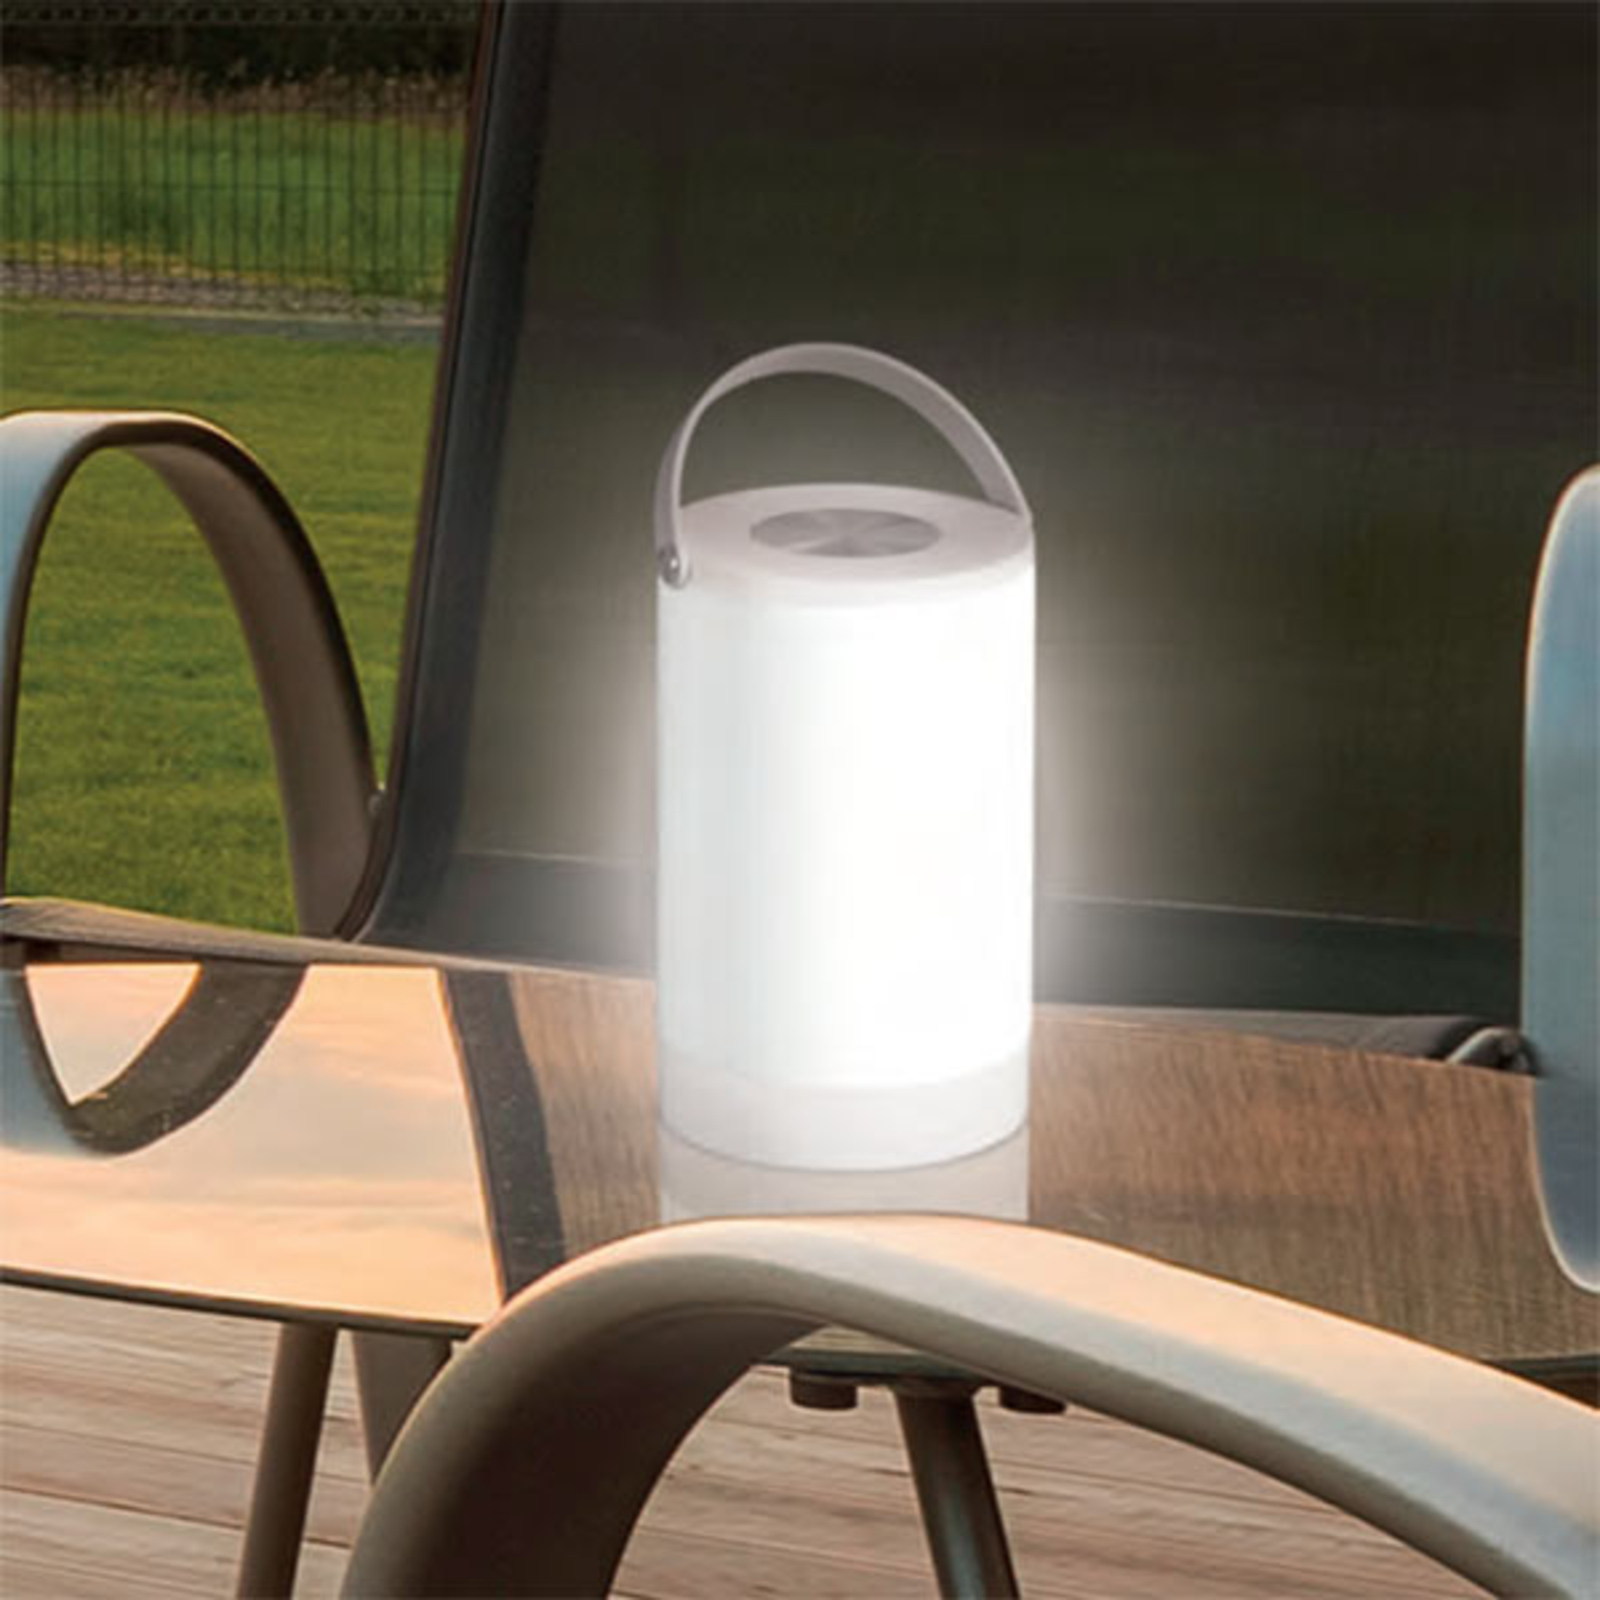 Keke LED table lamp, battery-powered and portable